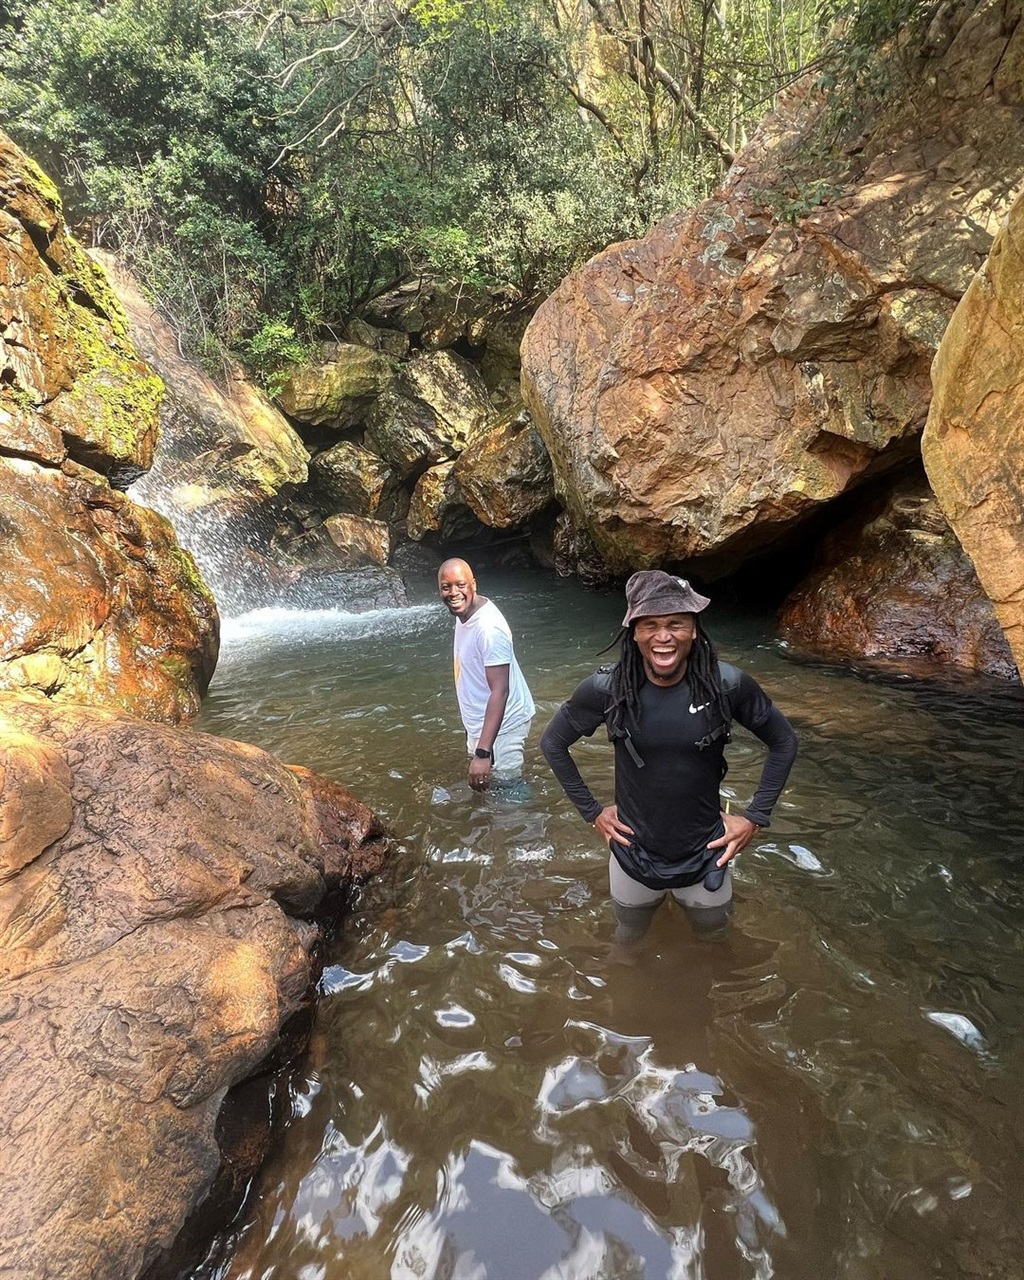 Siphiwe Tshabalala visited a scenic hiking trail o